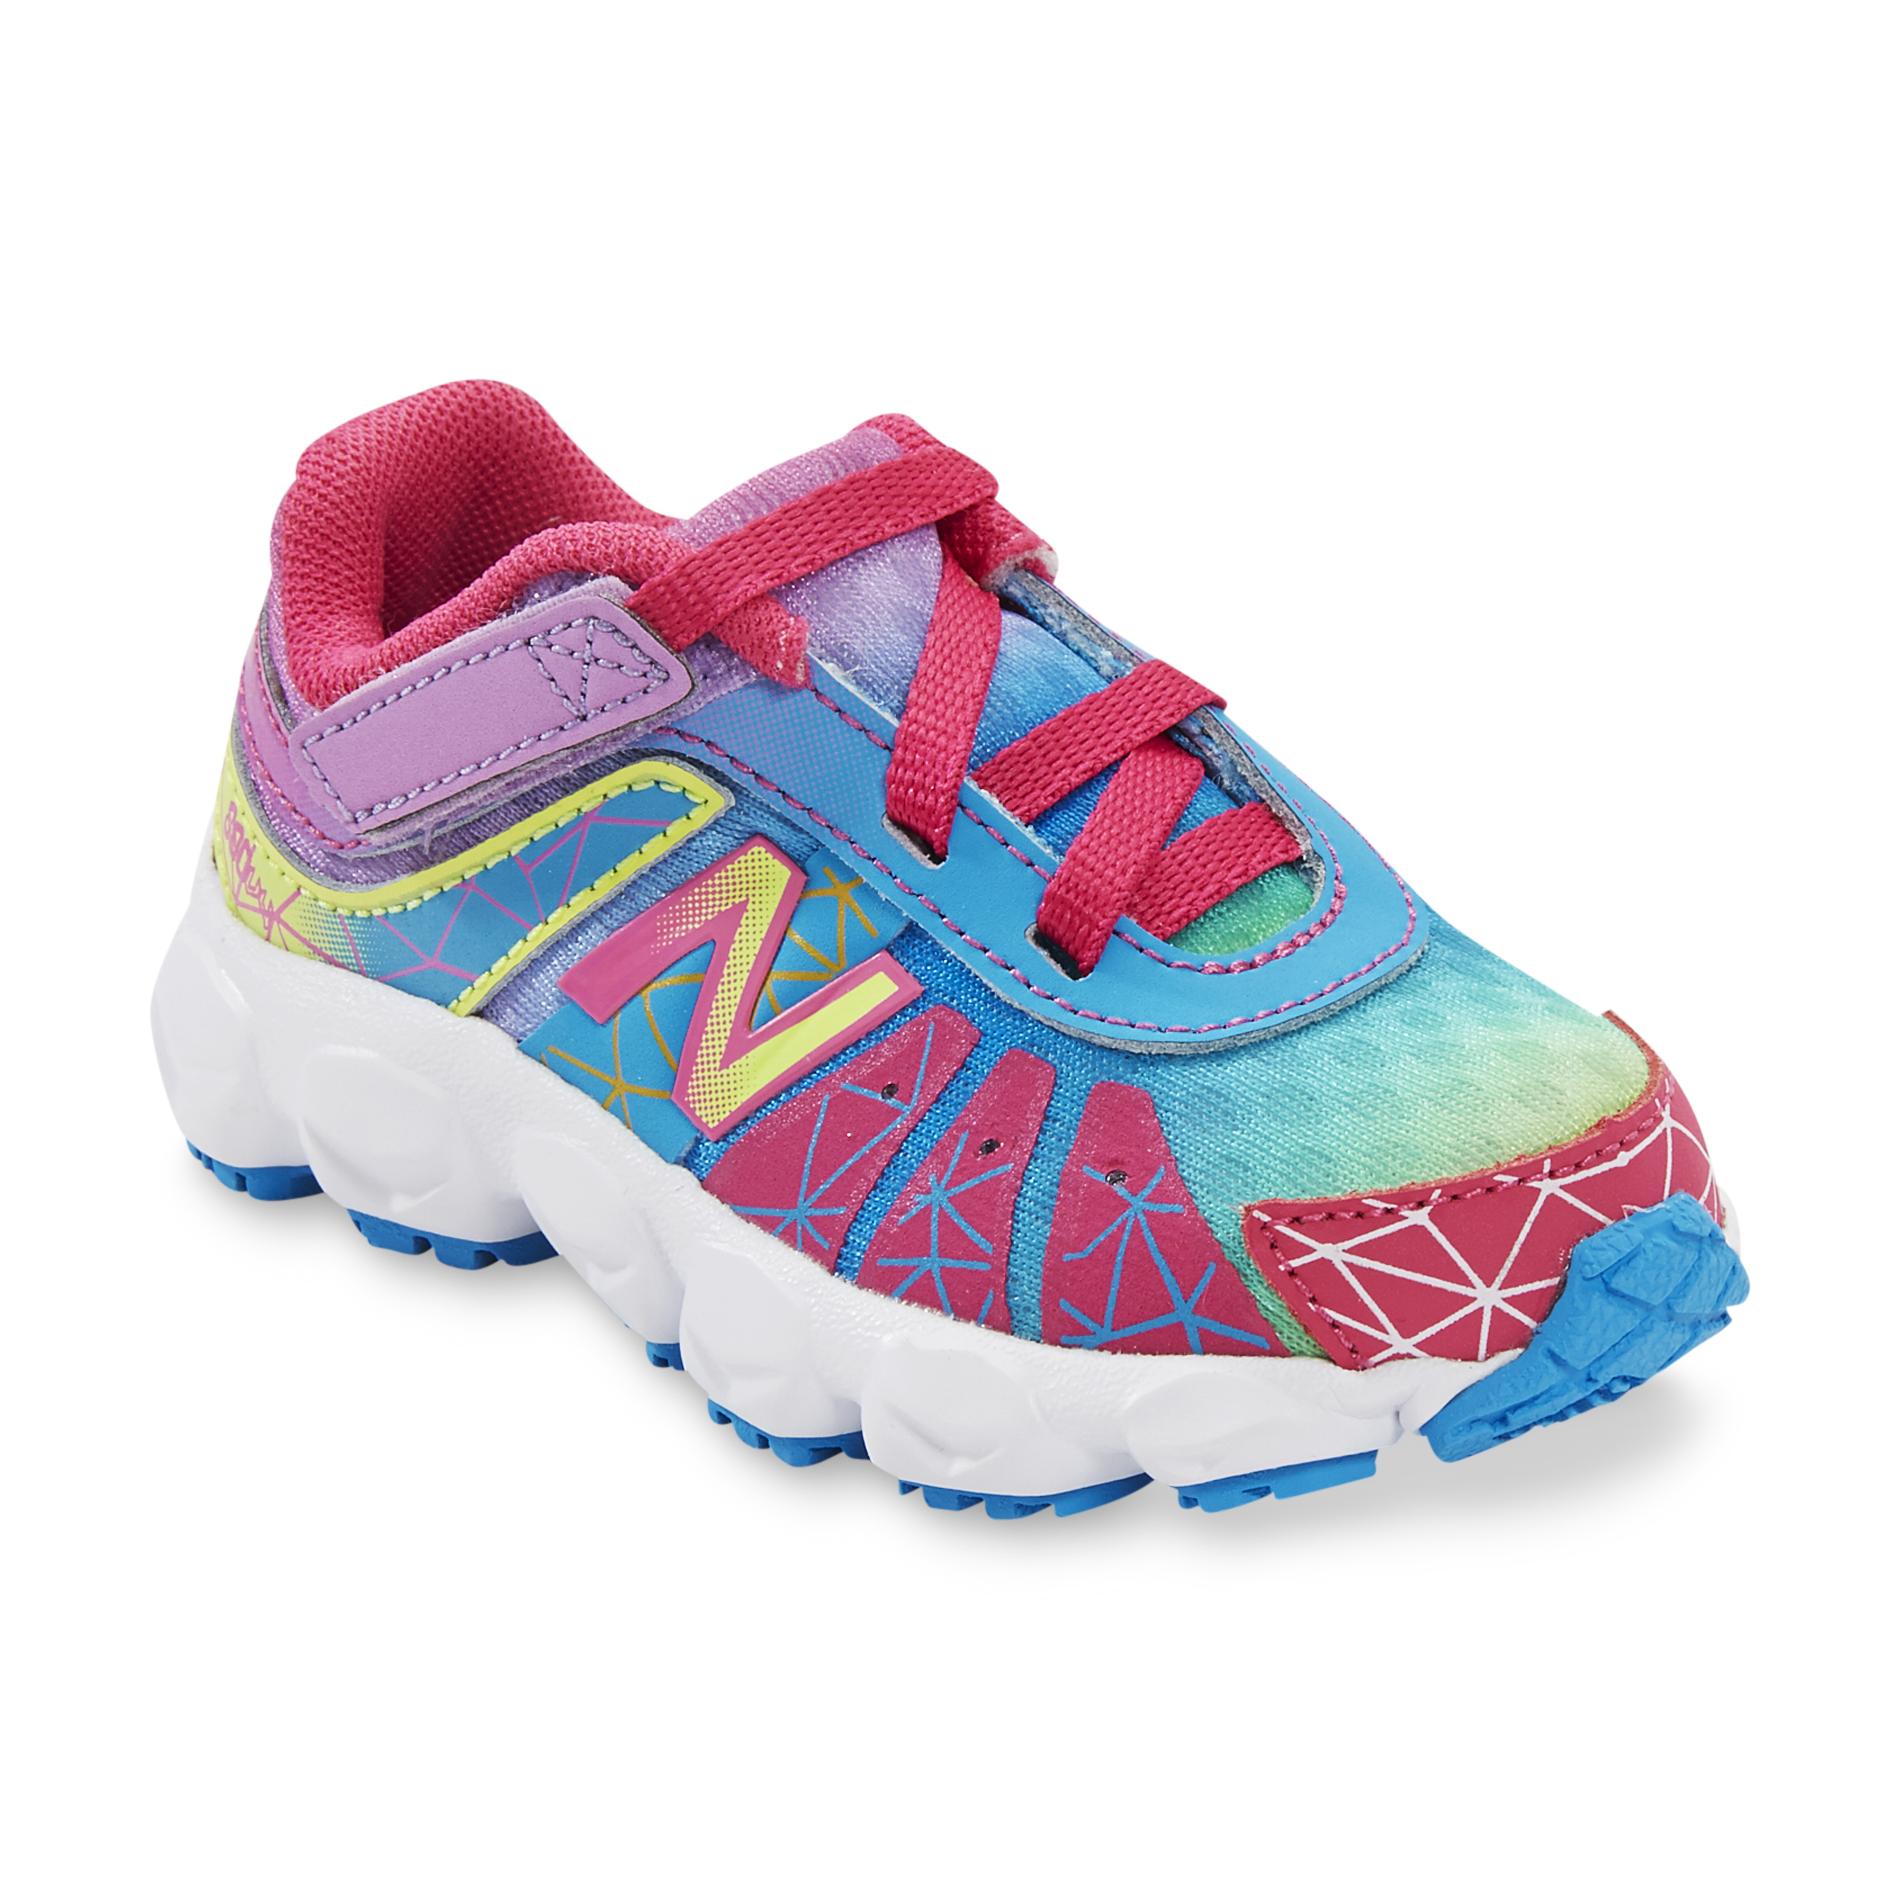 New Balance Toddler Girl's 890V4 Athletic Shoe - Pink Multi Color